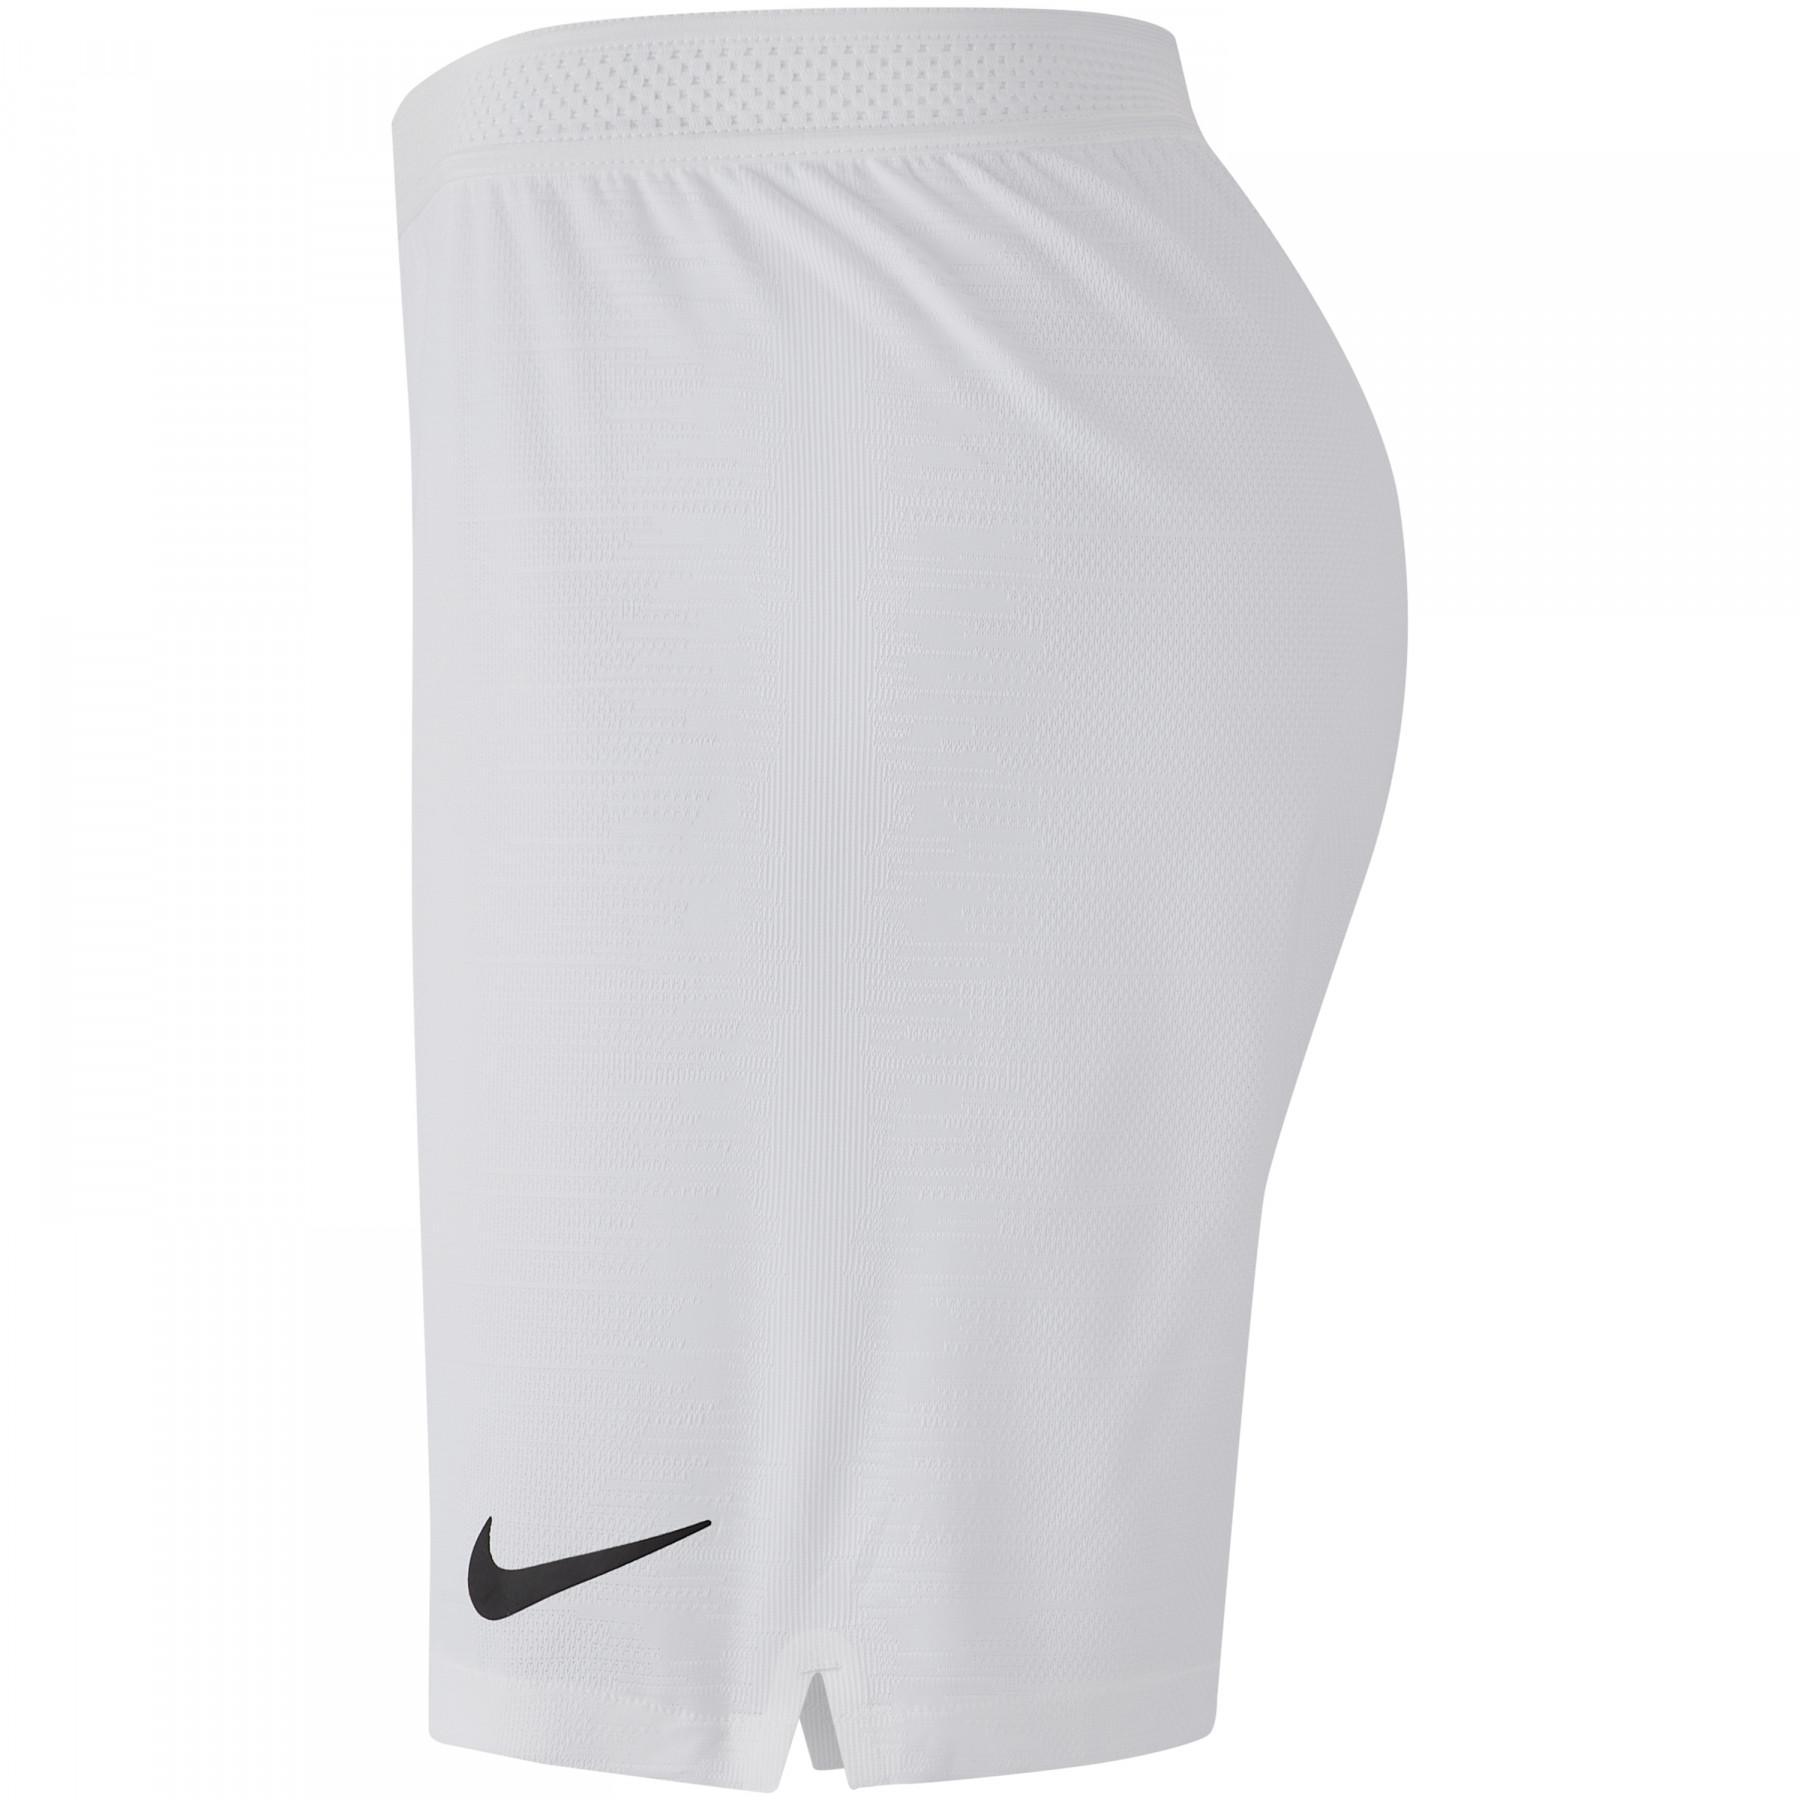 Pantalón corto Nike VaporKnit II